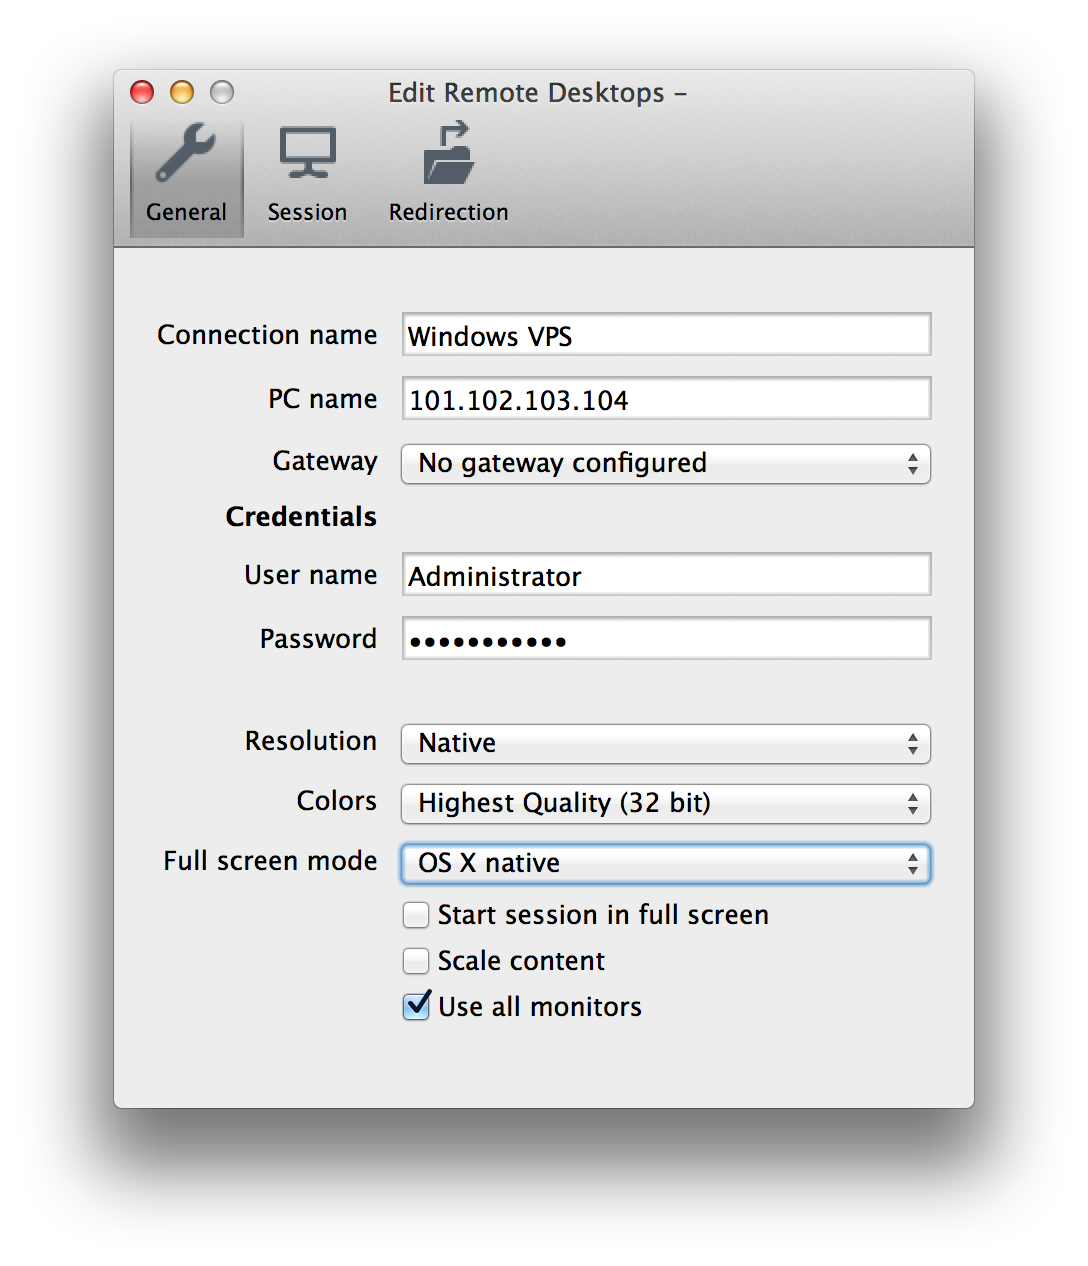 microsoft remote desktop client for mac